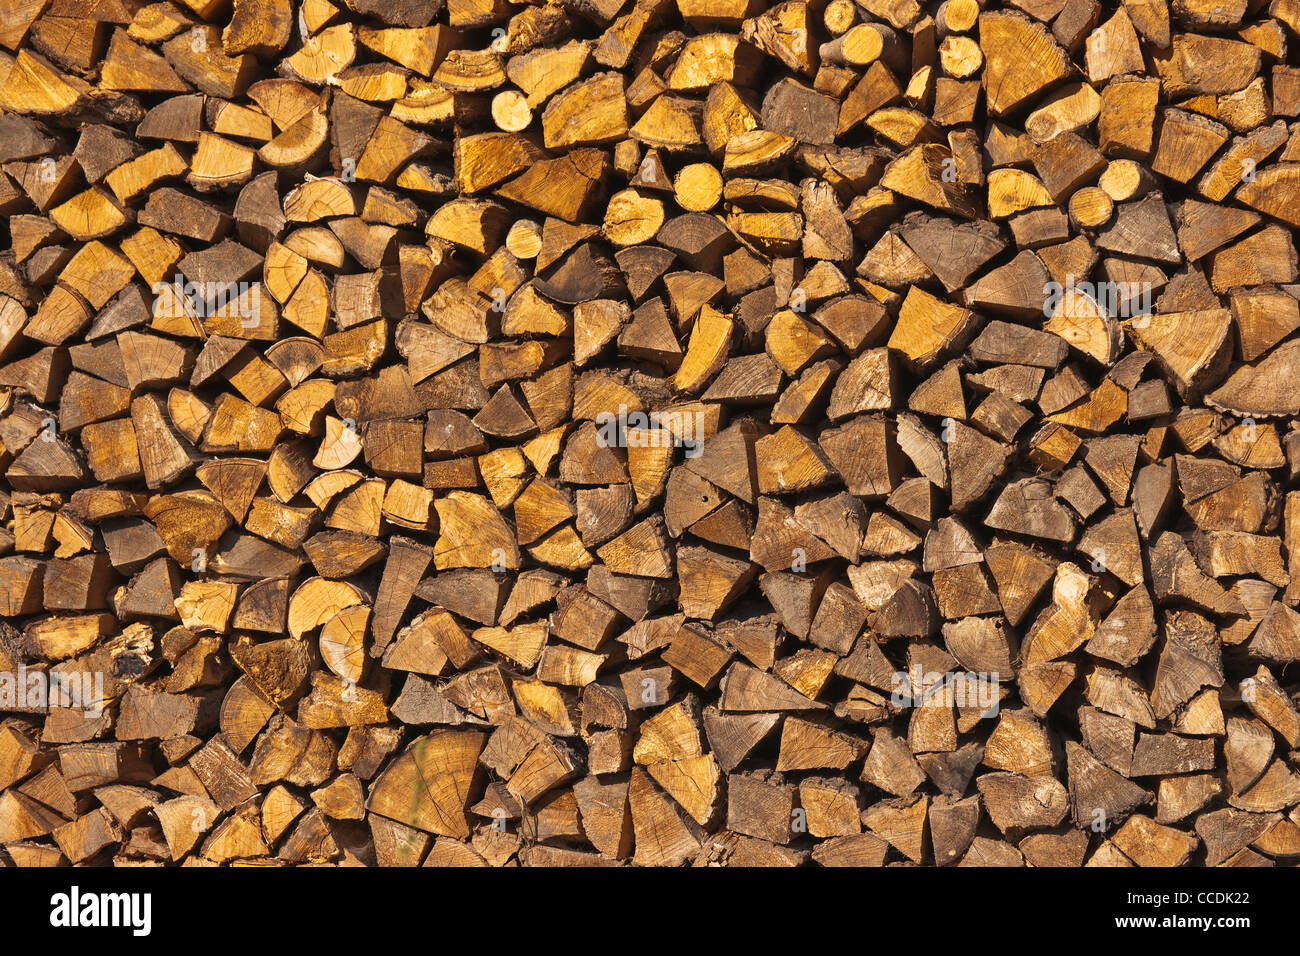 Detailansicht eines Stapels mit Feuerholz | Detail photo of a stack with firewood Stock Photo